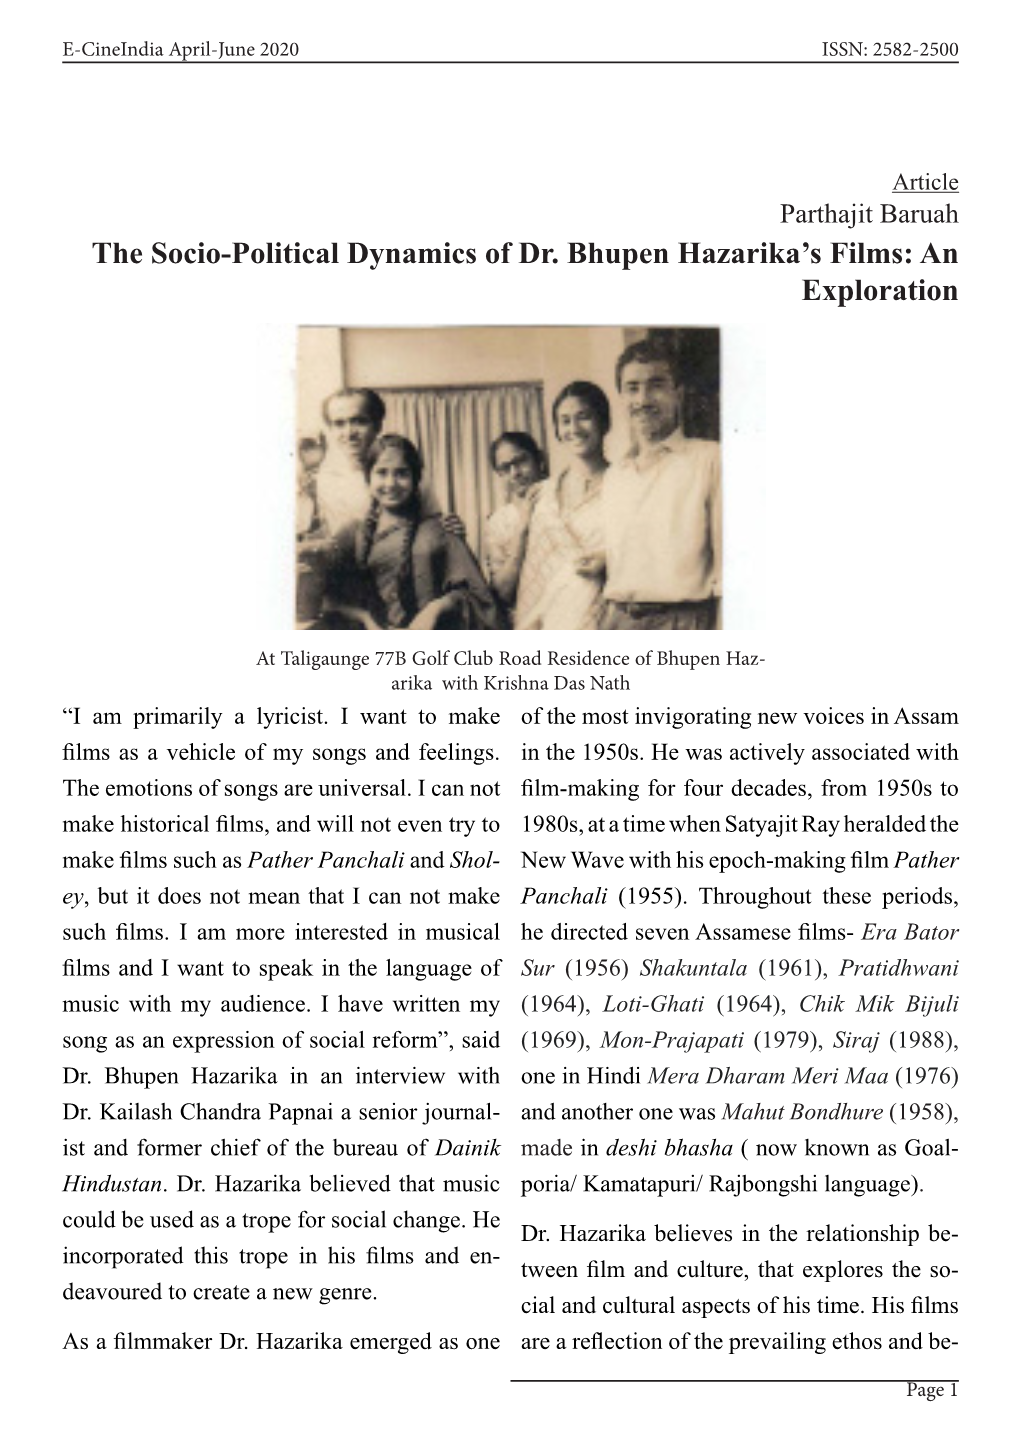 The Socio-Political Dynamics of Dr. Bhupen Hazarika's